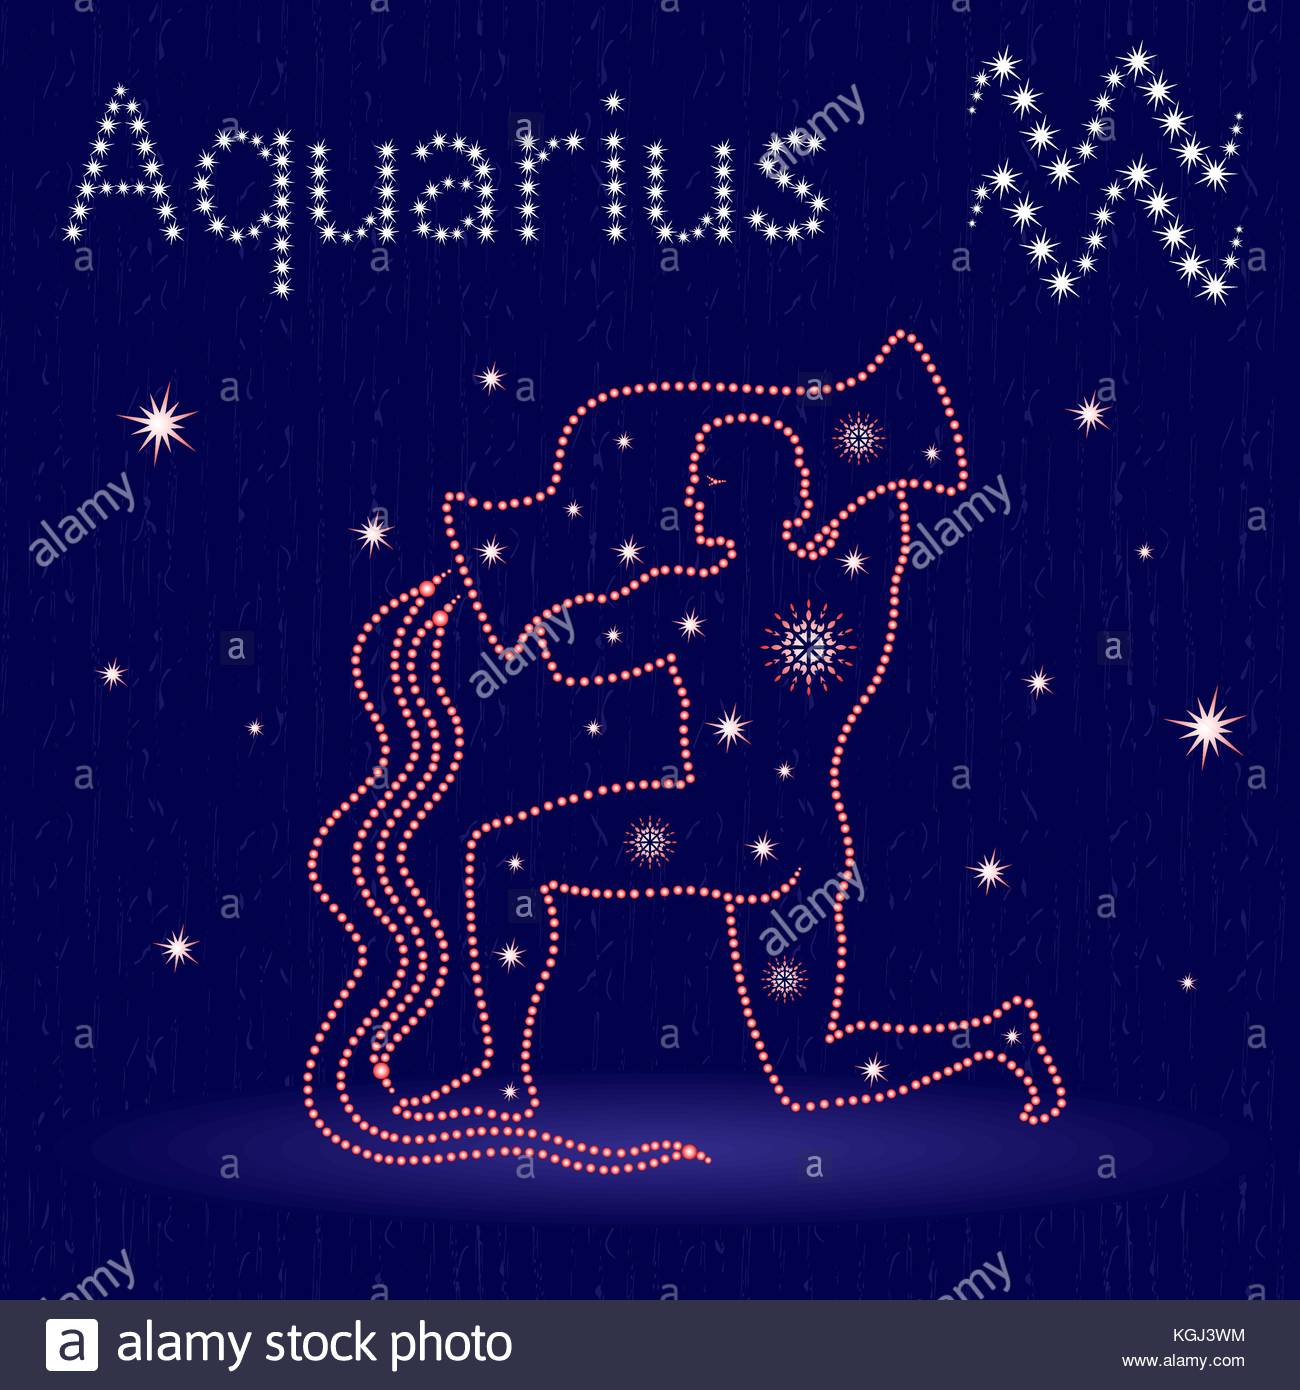 Aquarius Constellation Drawing at GetDrawings Free download